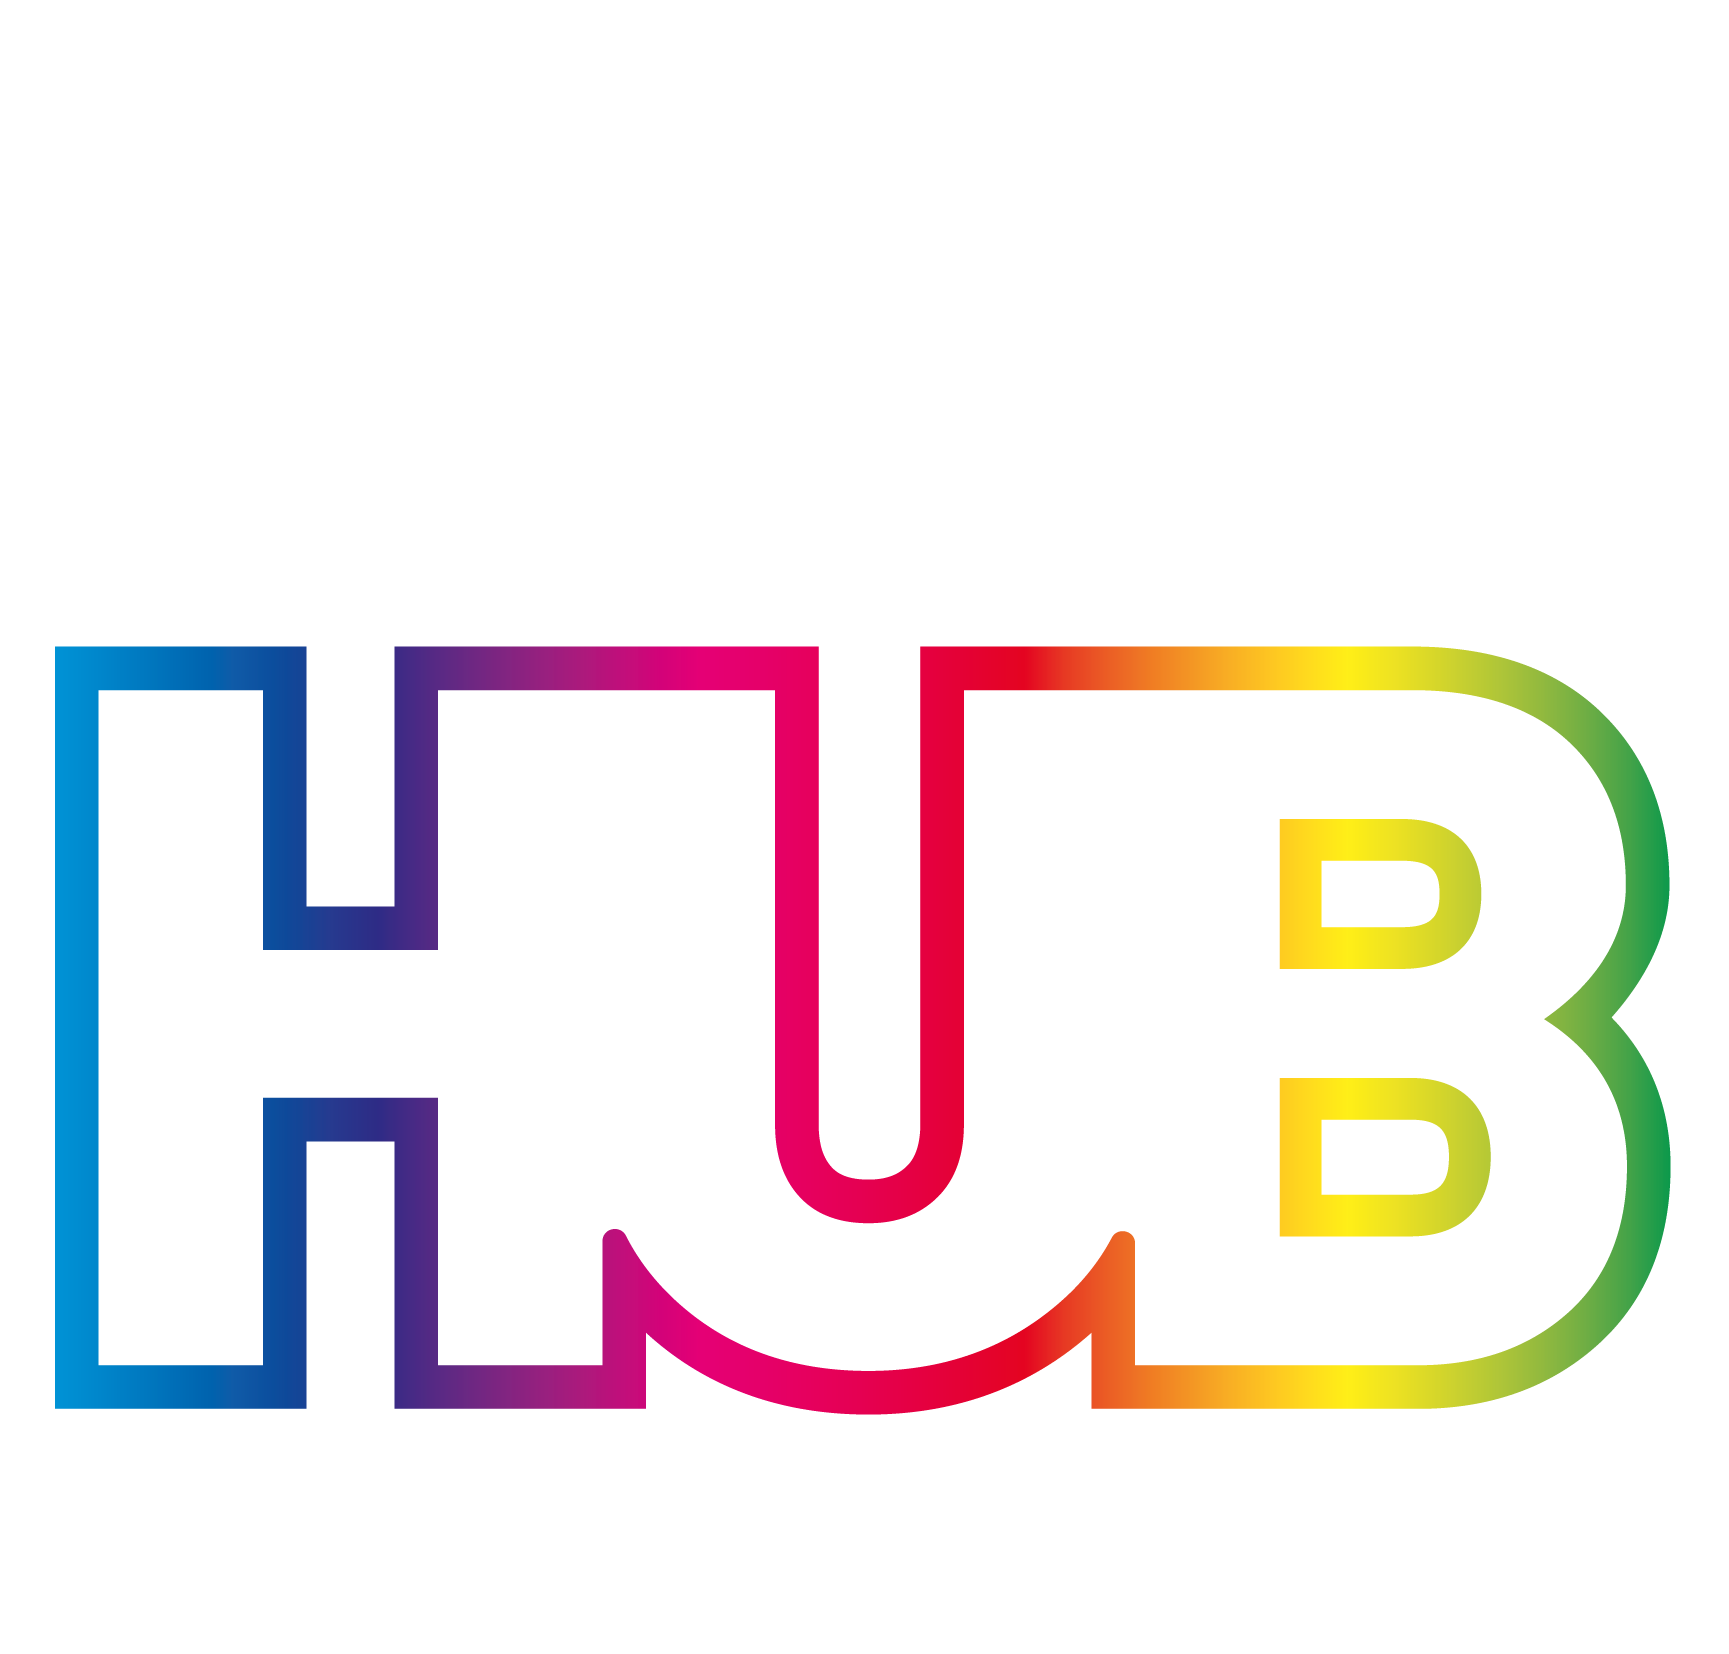 The Corporate HUB